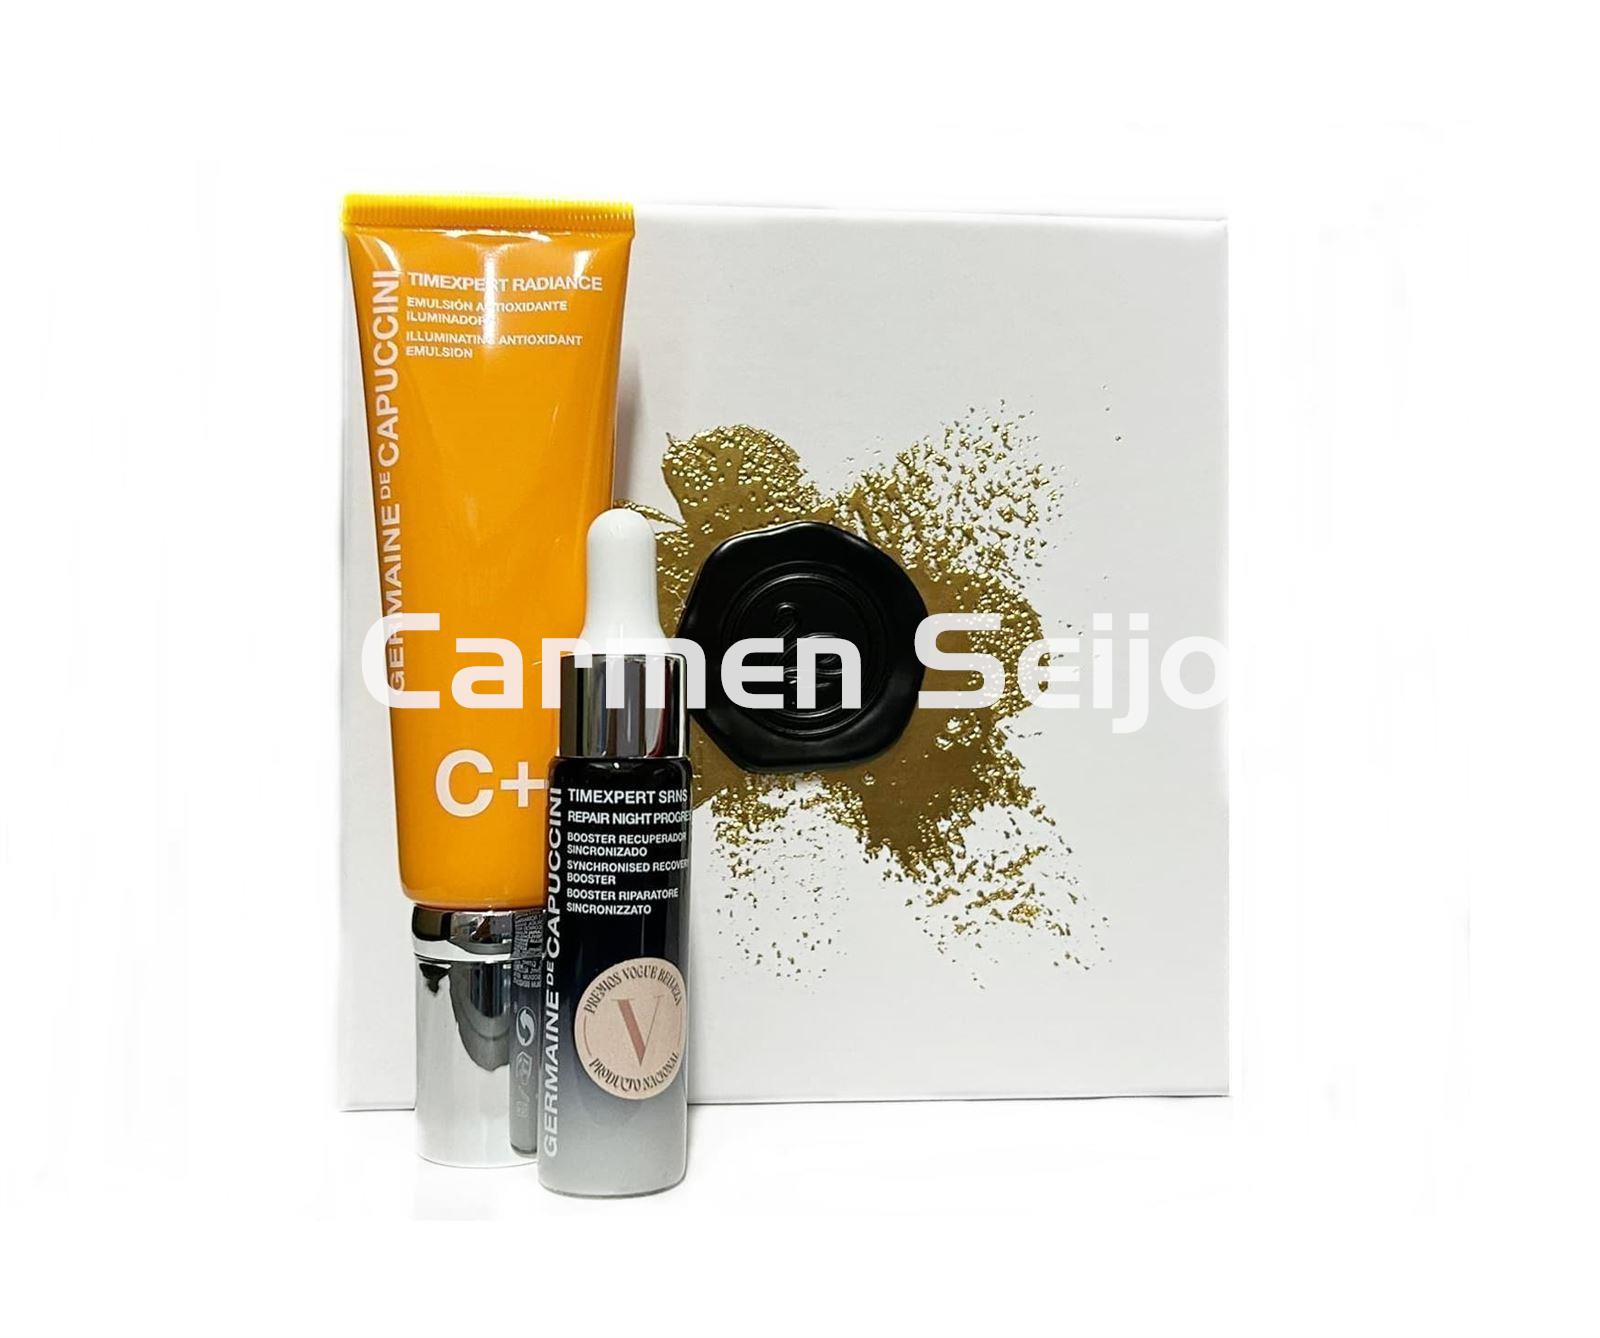 Germaine de Capuccini Pack Emulsión Vitamina C Timexpert Radiance C+ - Imagen 1